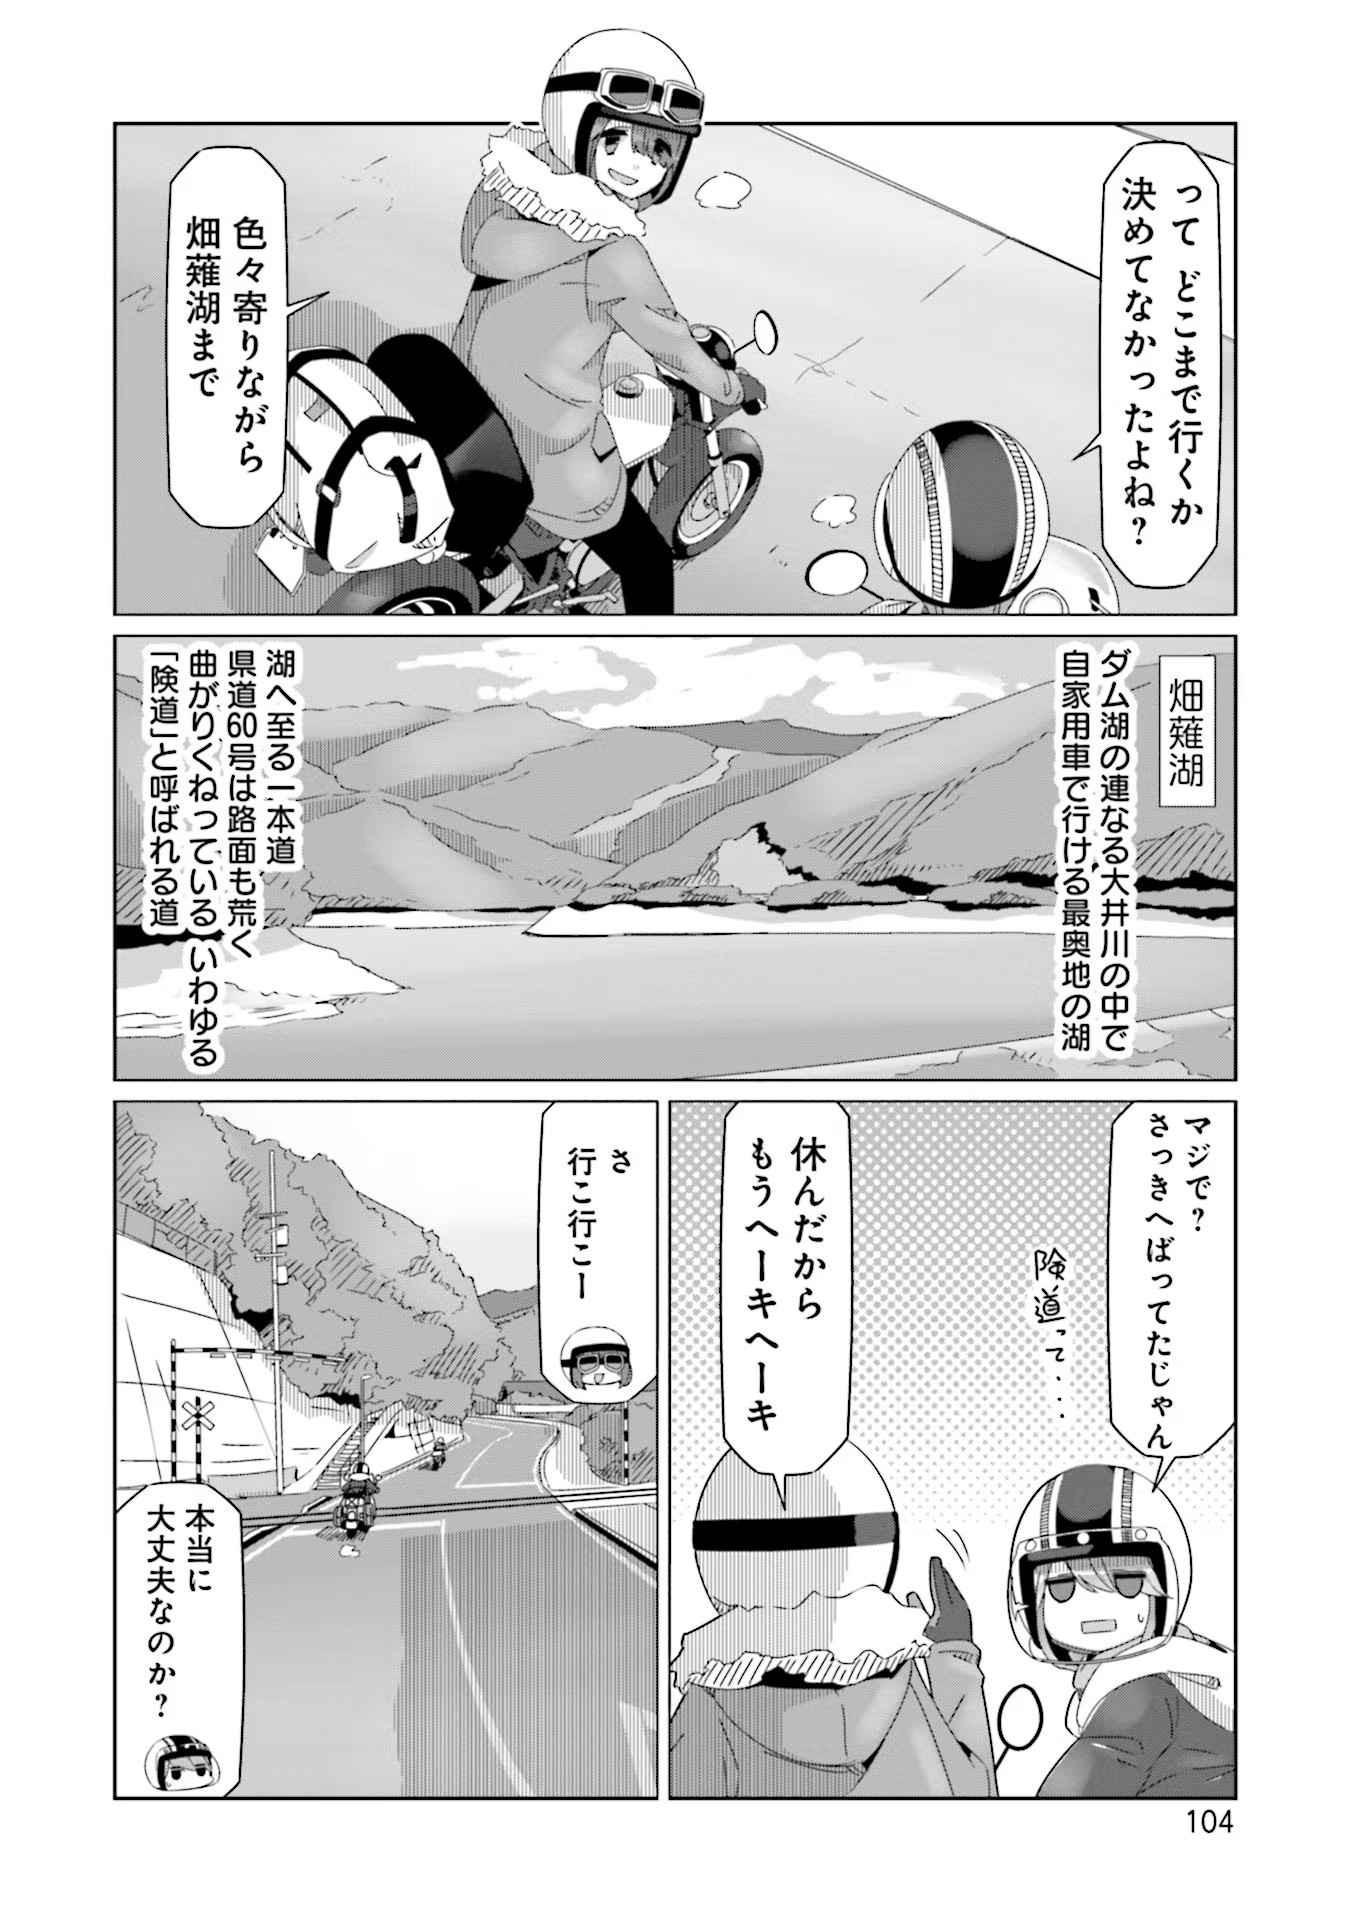 Yuru Camp - Chapter 56 - Page 24